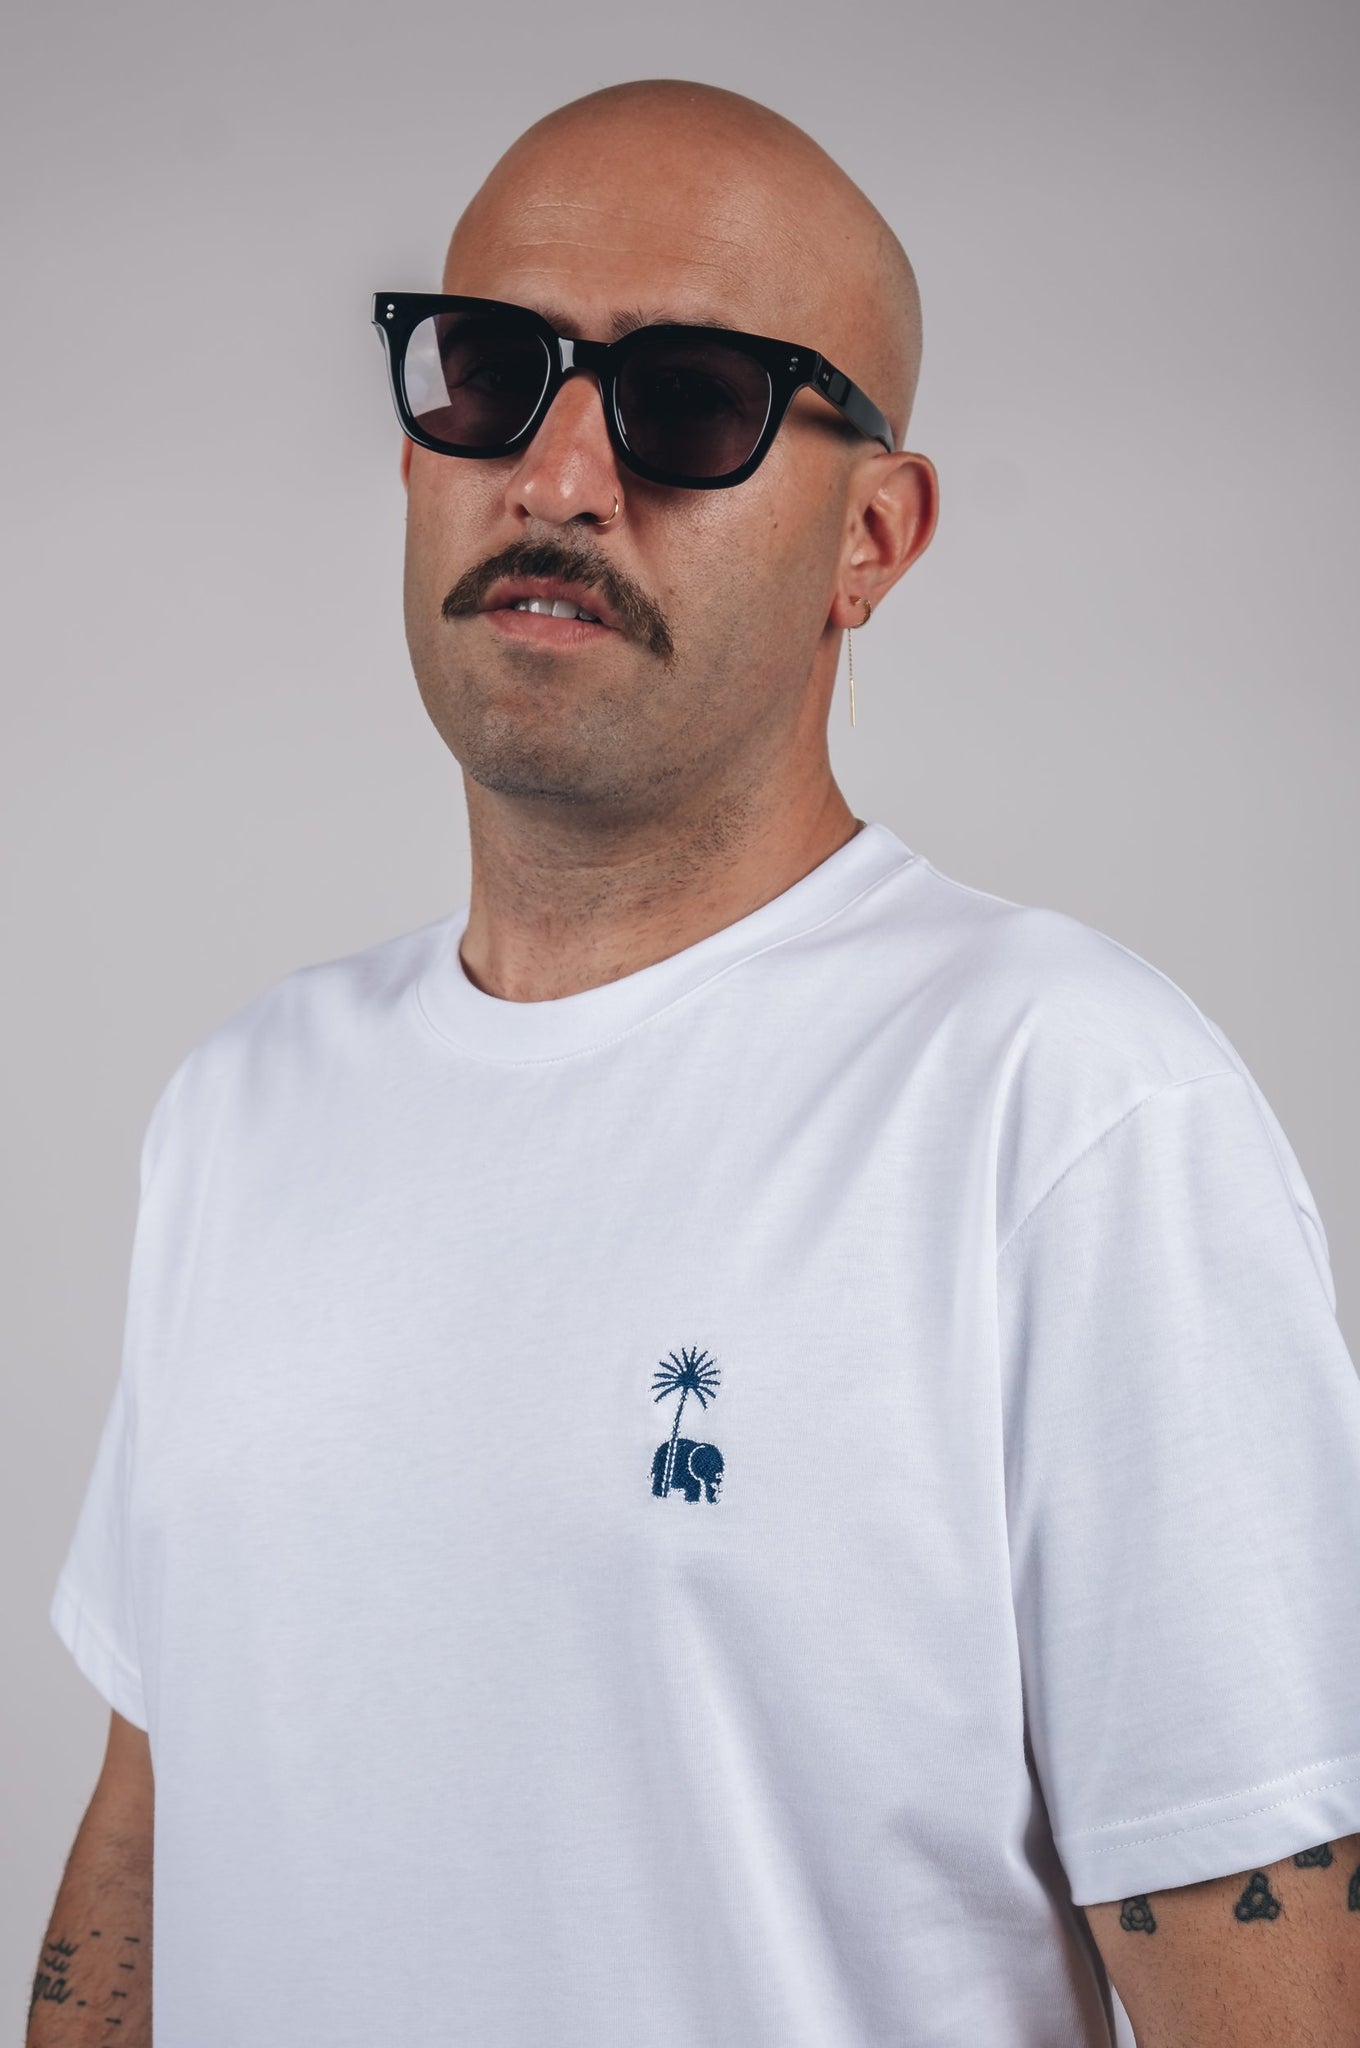 Antonyo Marest x Trendsplant Camiseta Hut Blueprint